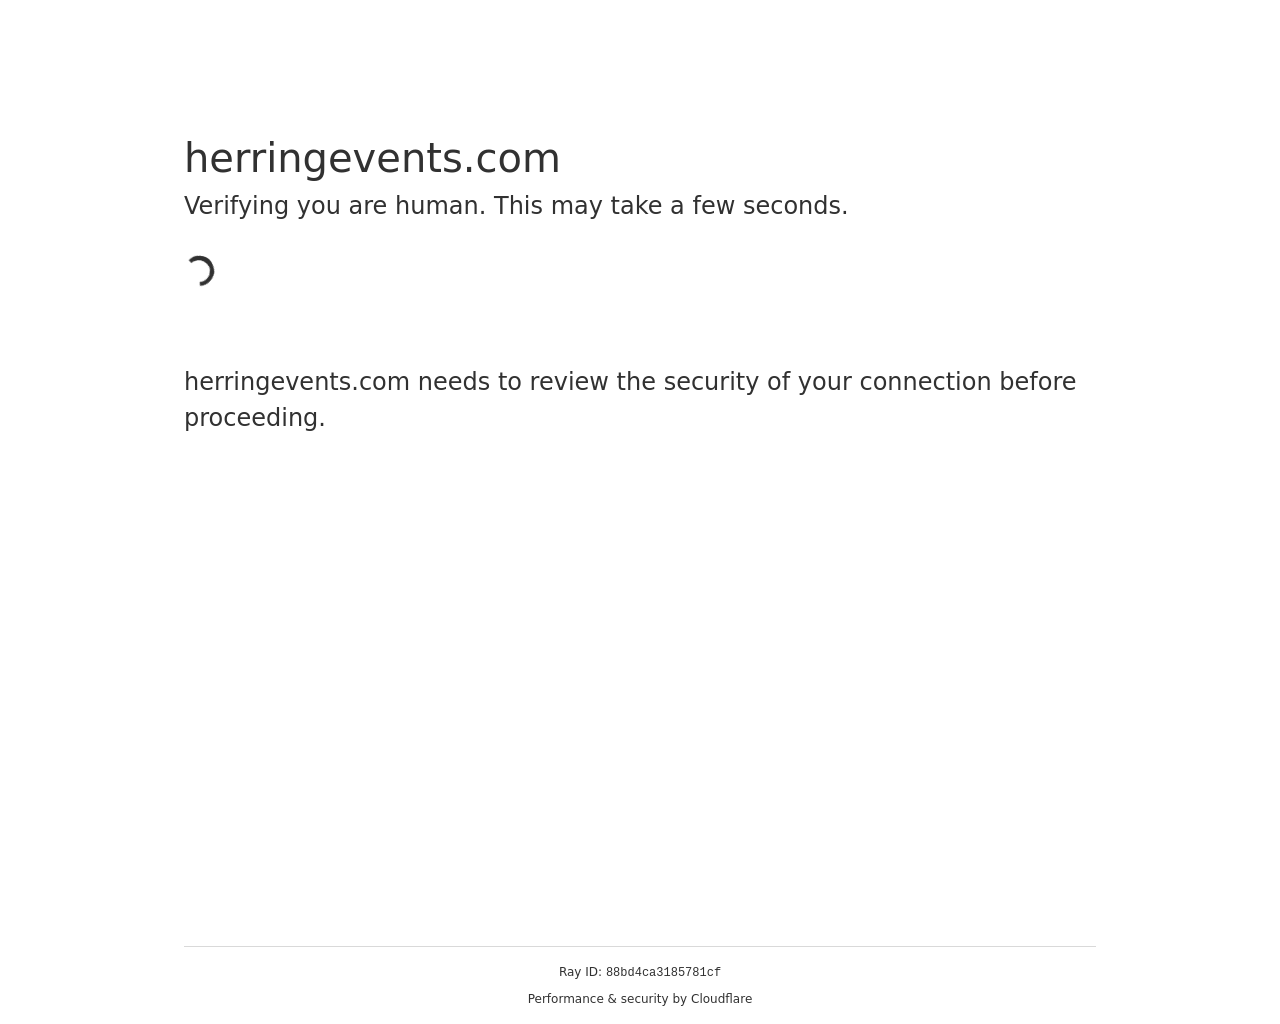 herringevents.com